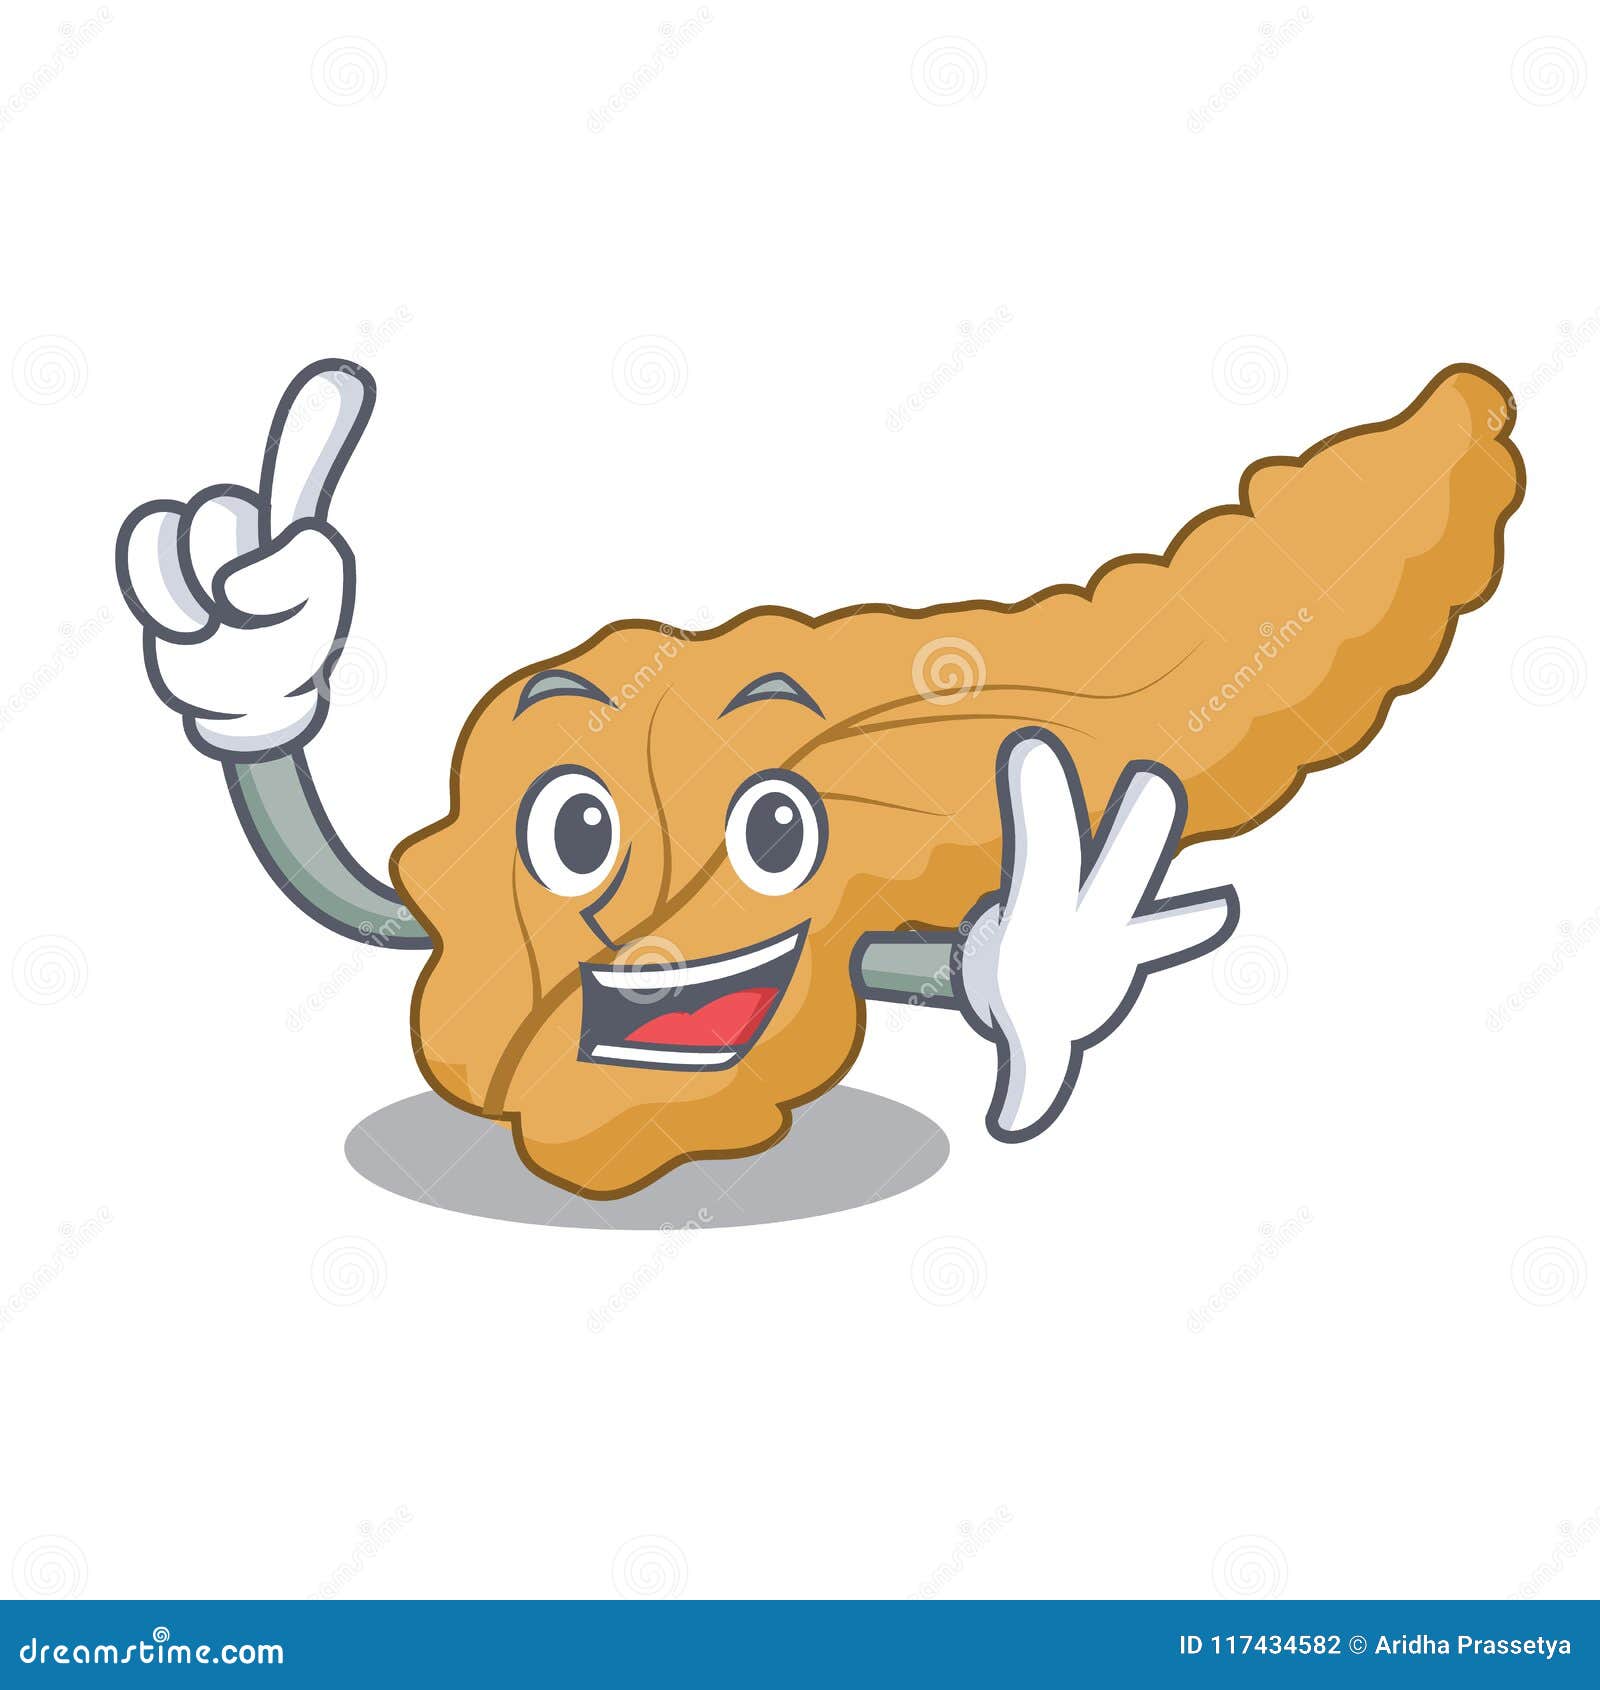 finger pancreas mascot cartoon style